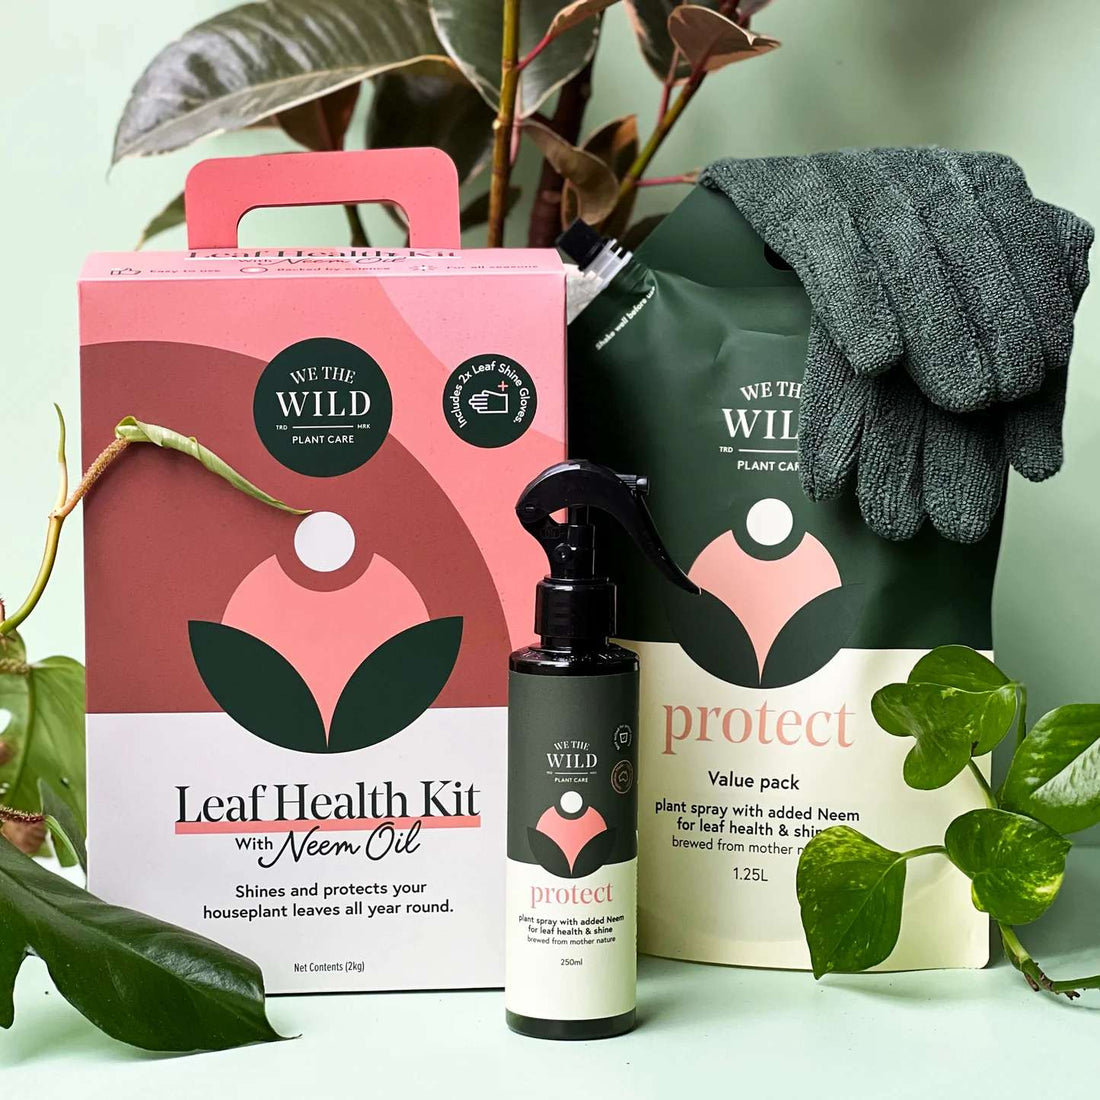 Leaf Health Kit - We The Wild